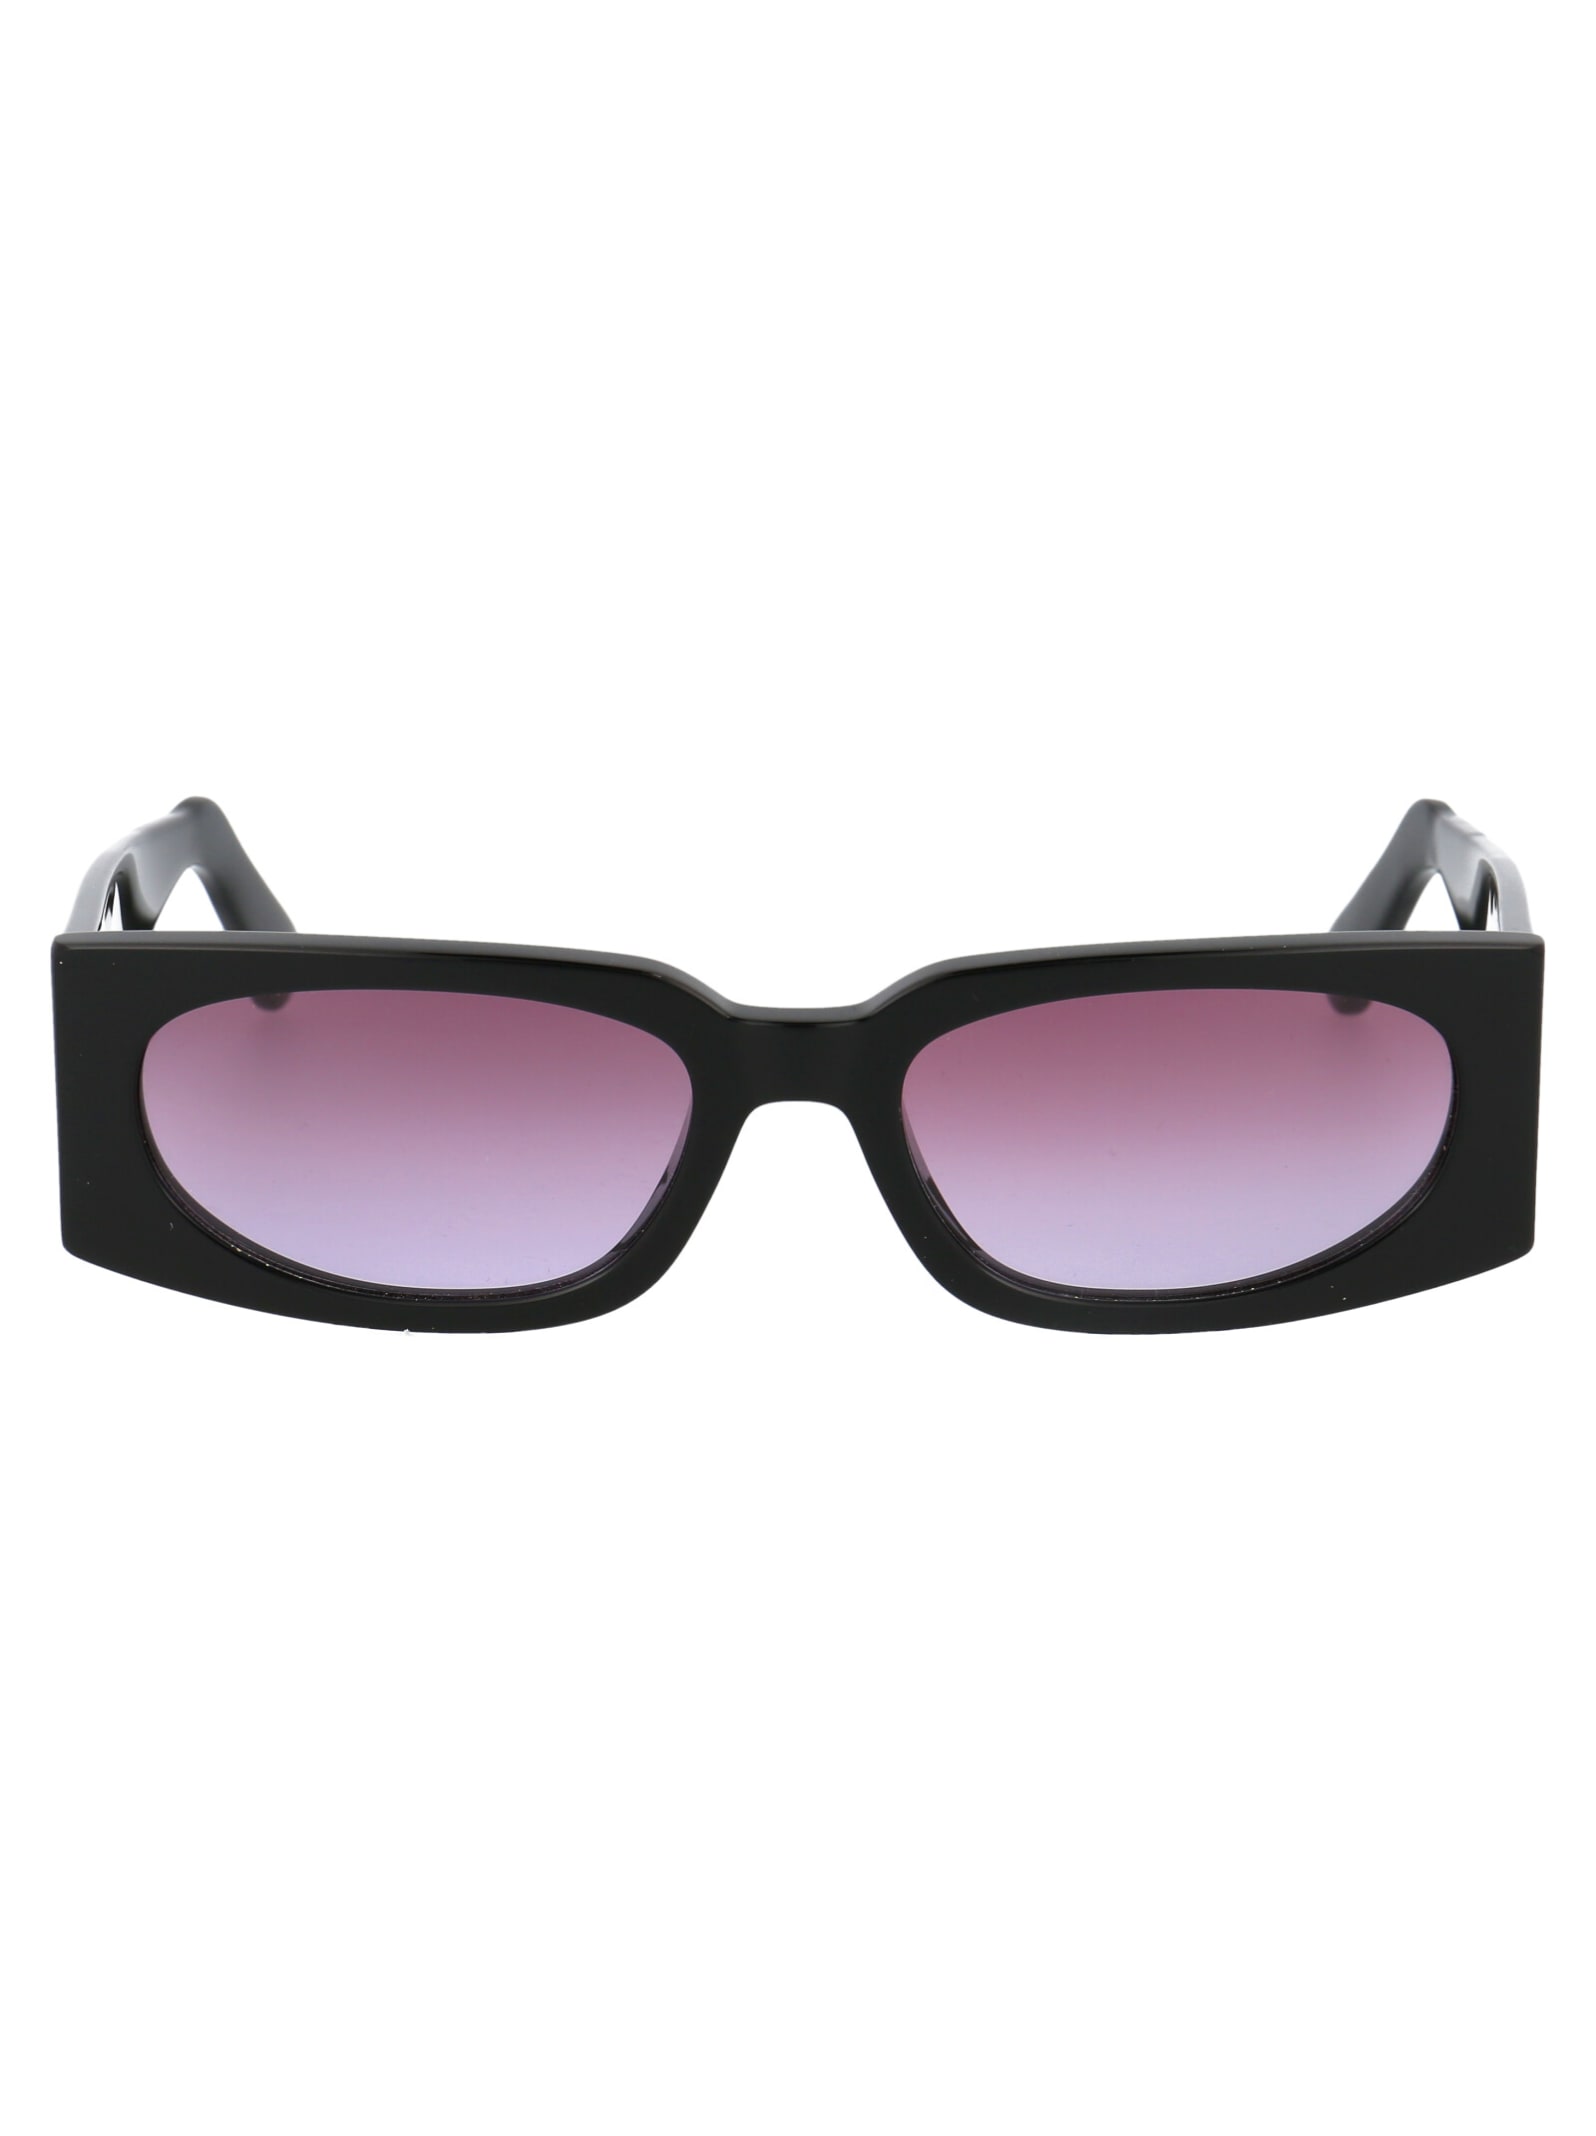 Gd0016 Sunglasses